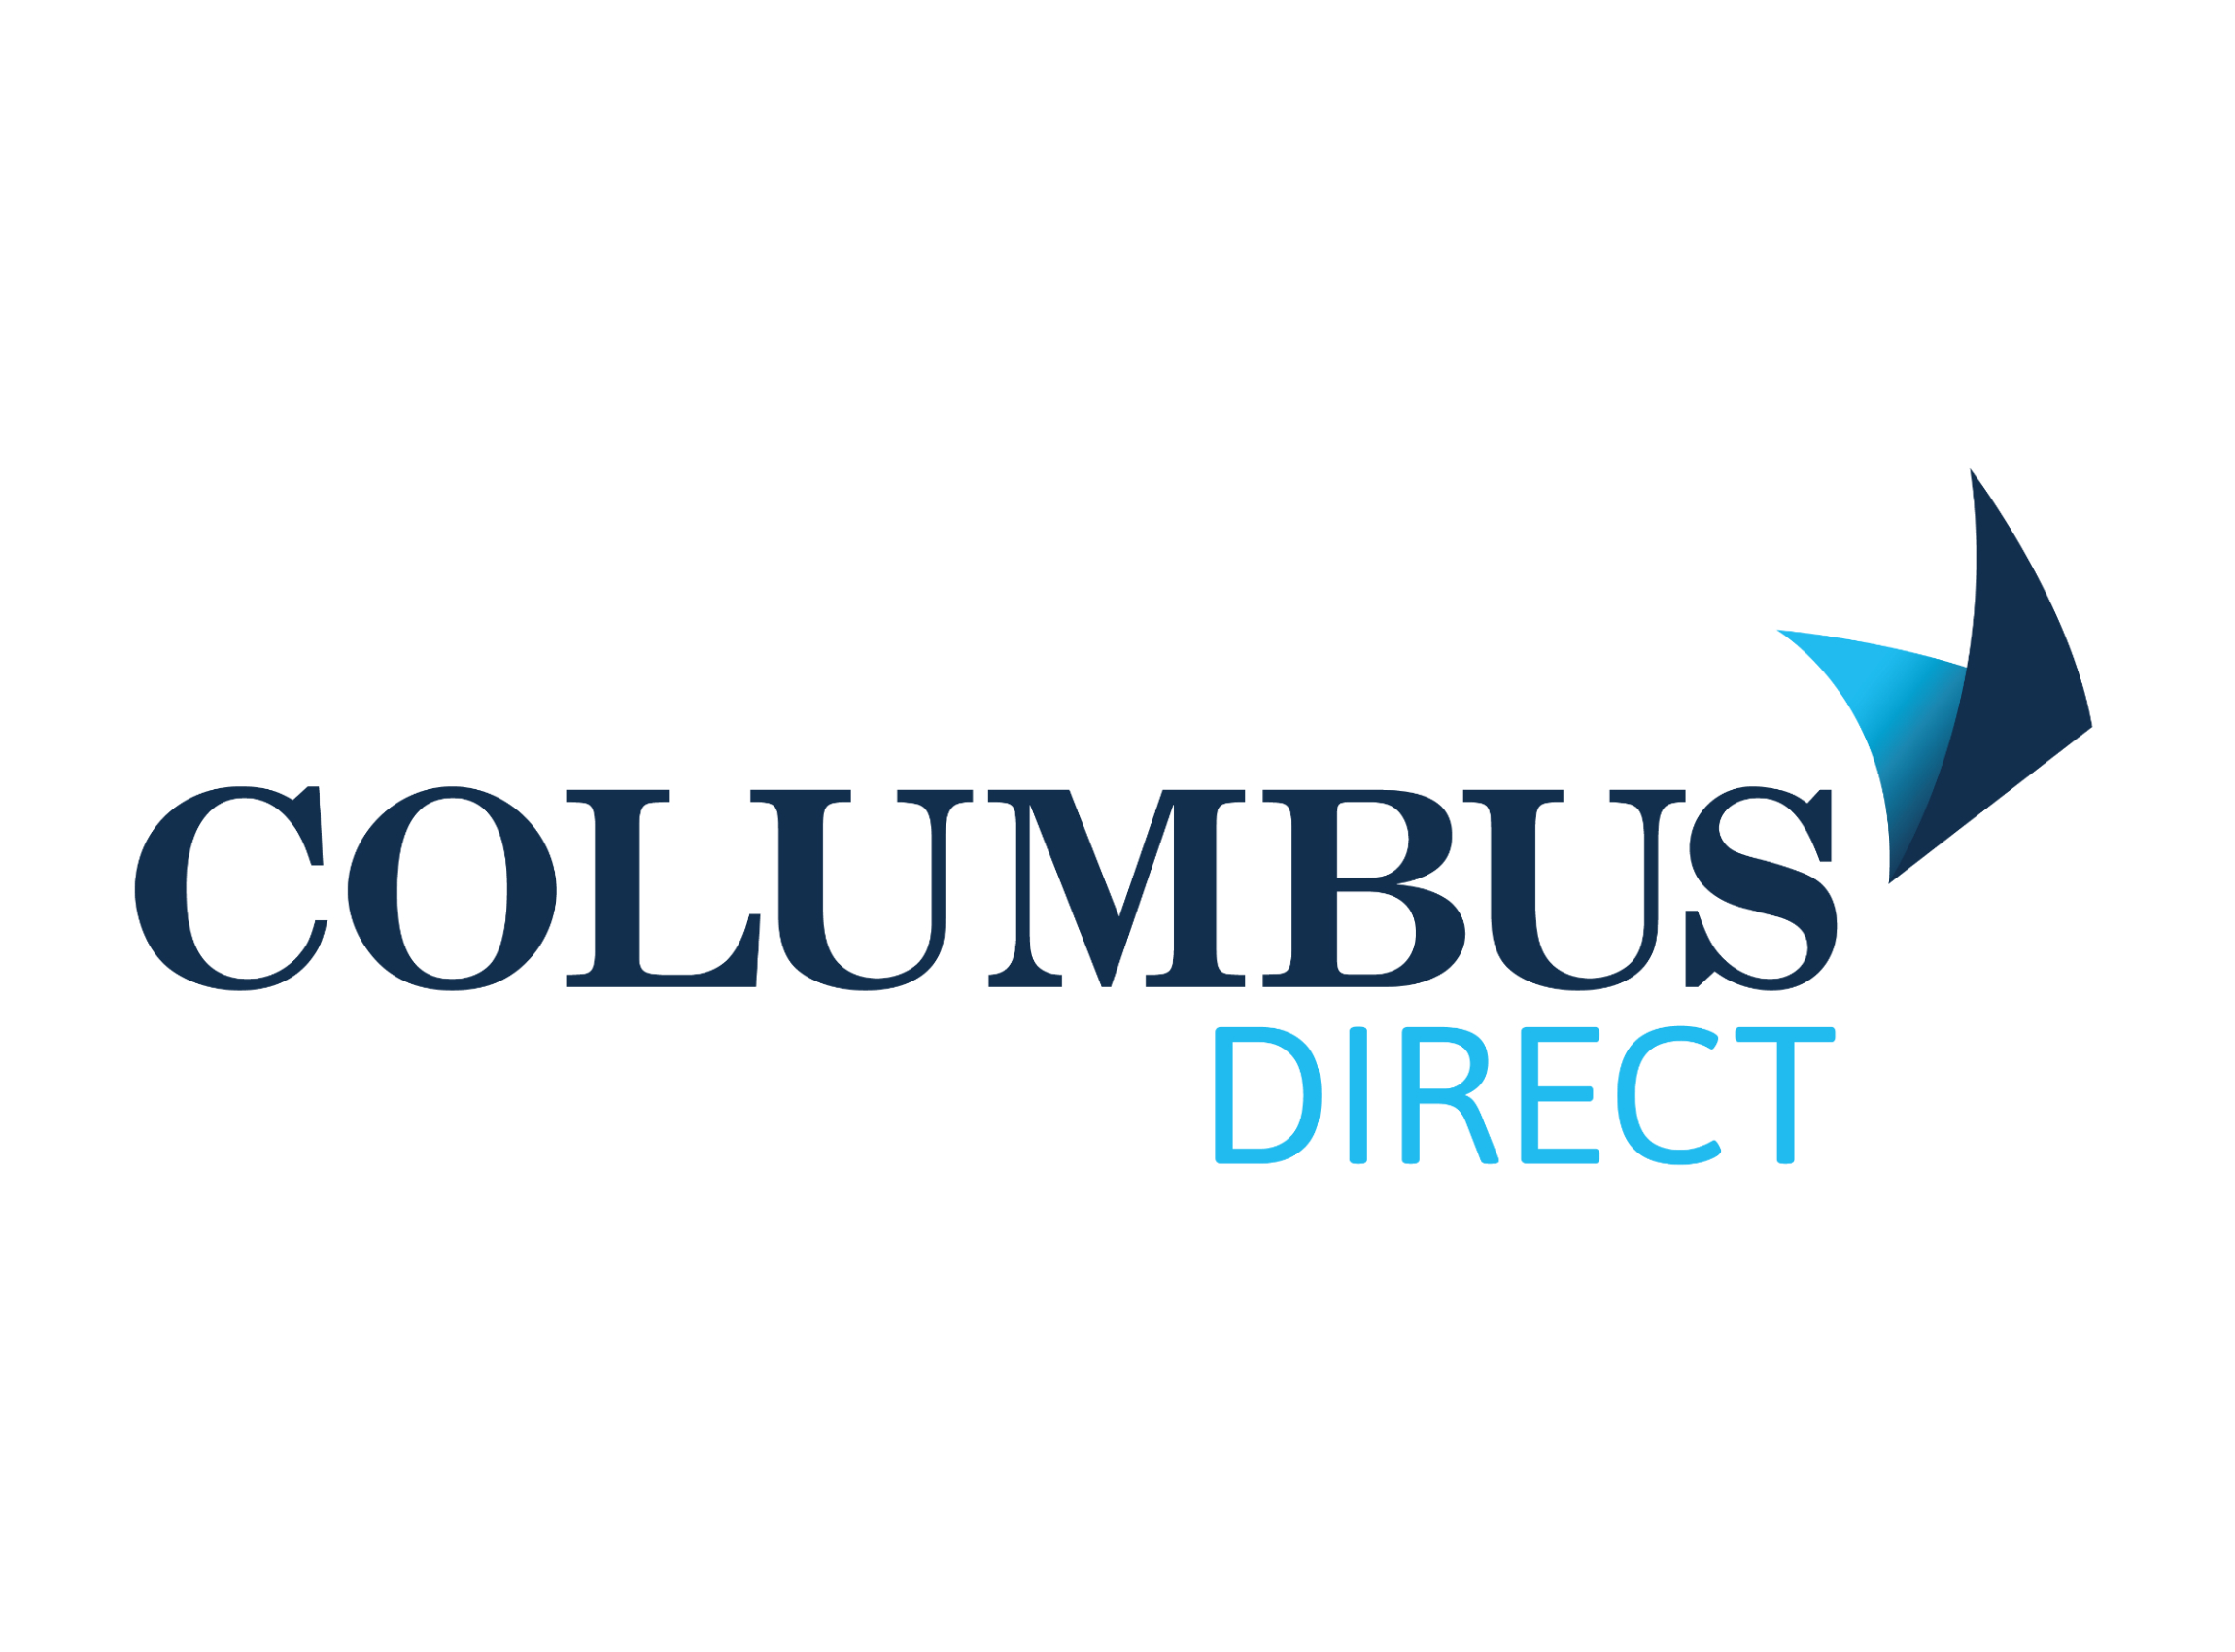 columbus direct travel insurance uk